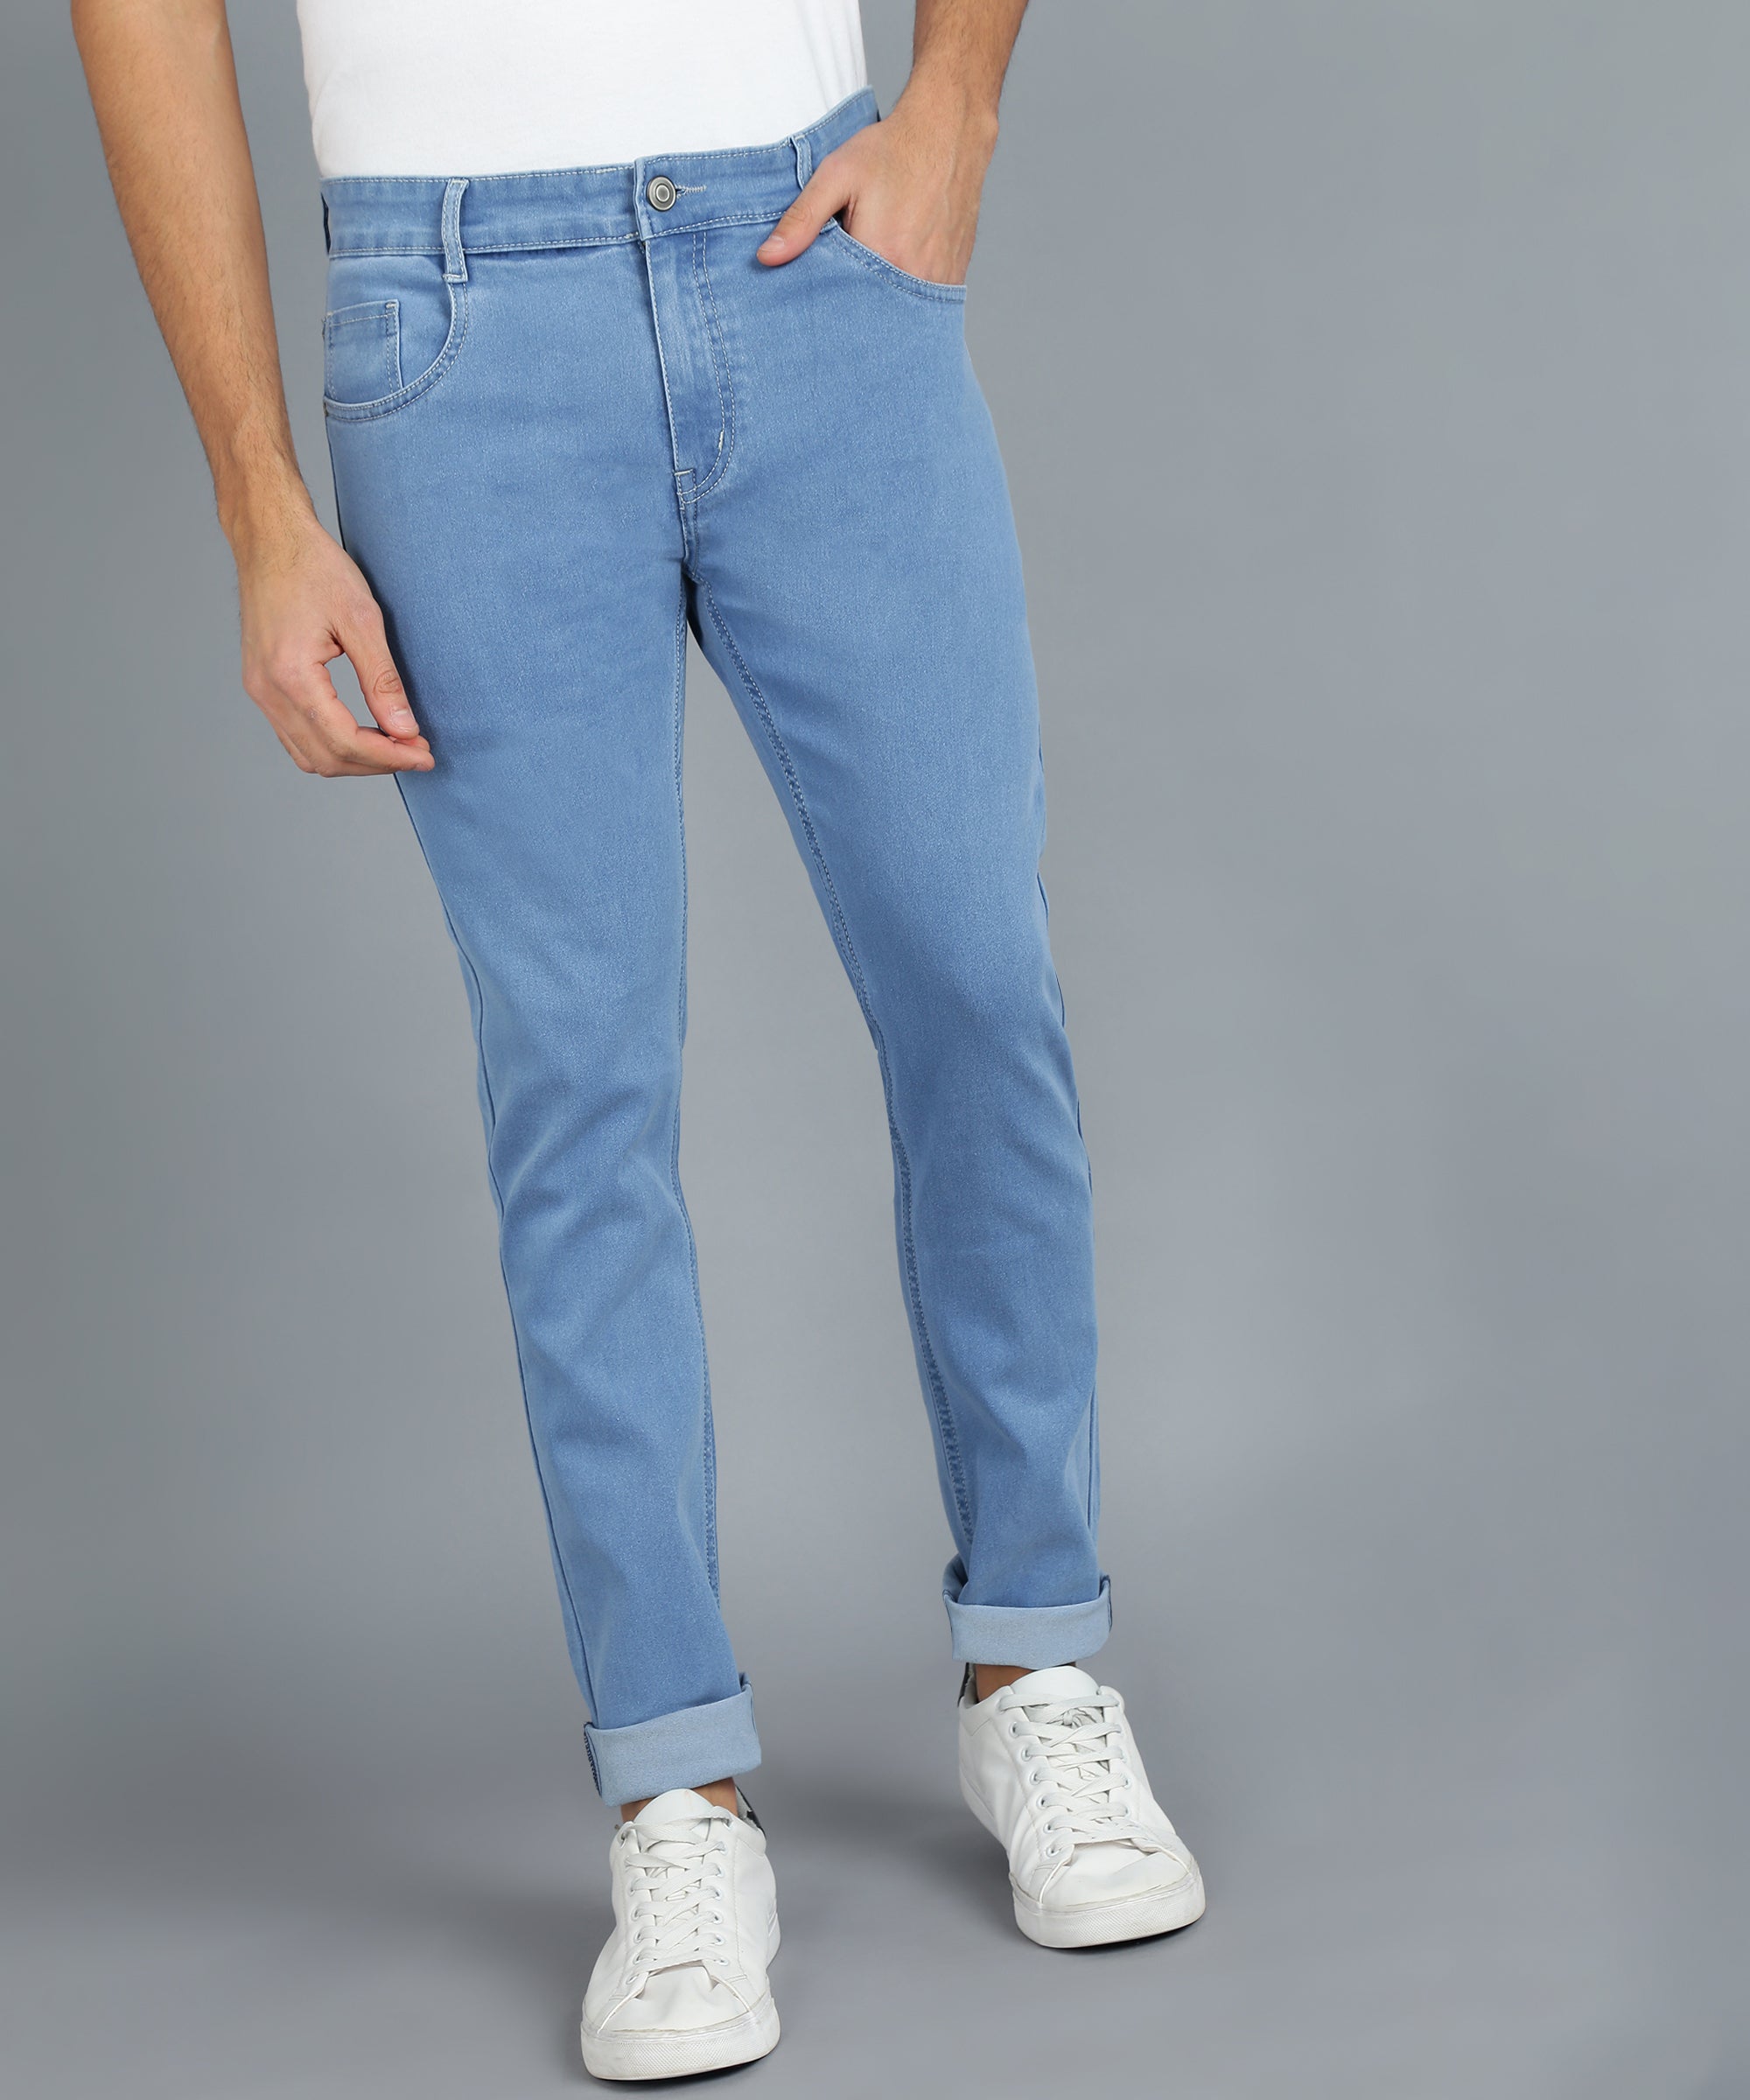 Men's Light Blue Slim Fit Jeans Stretchable